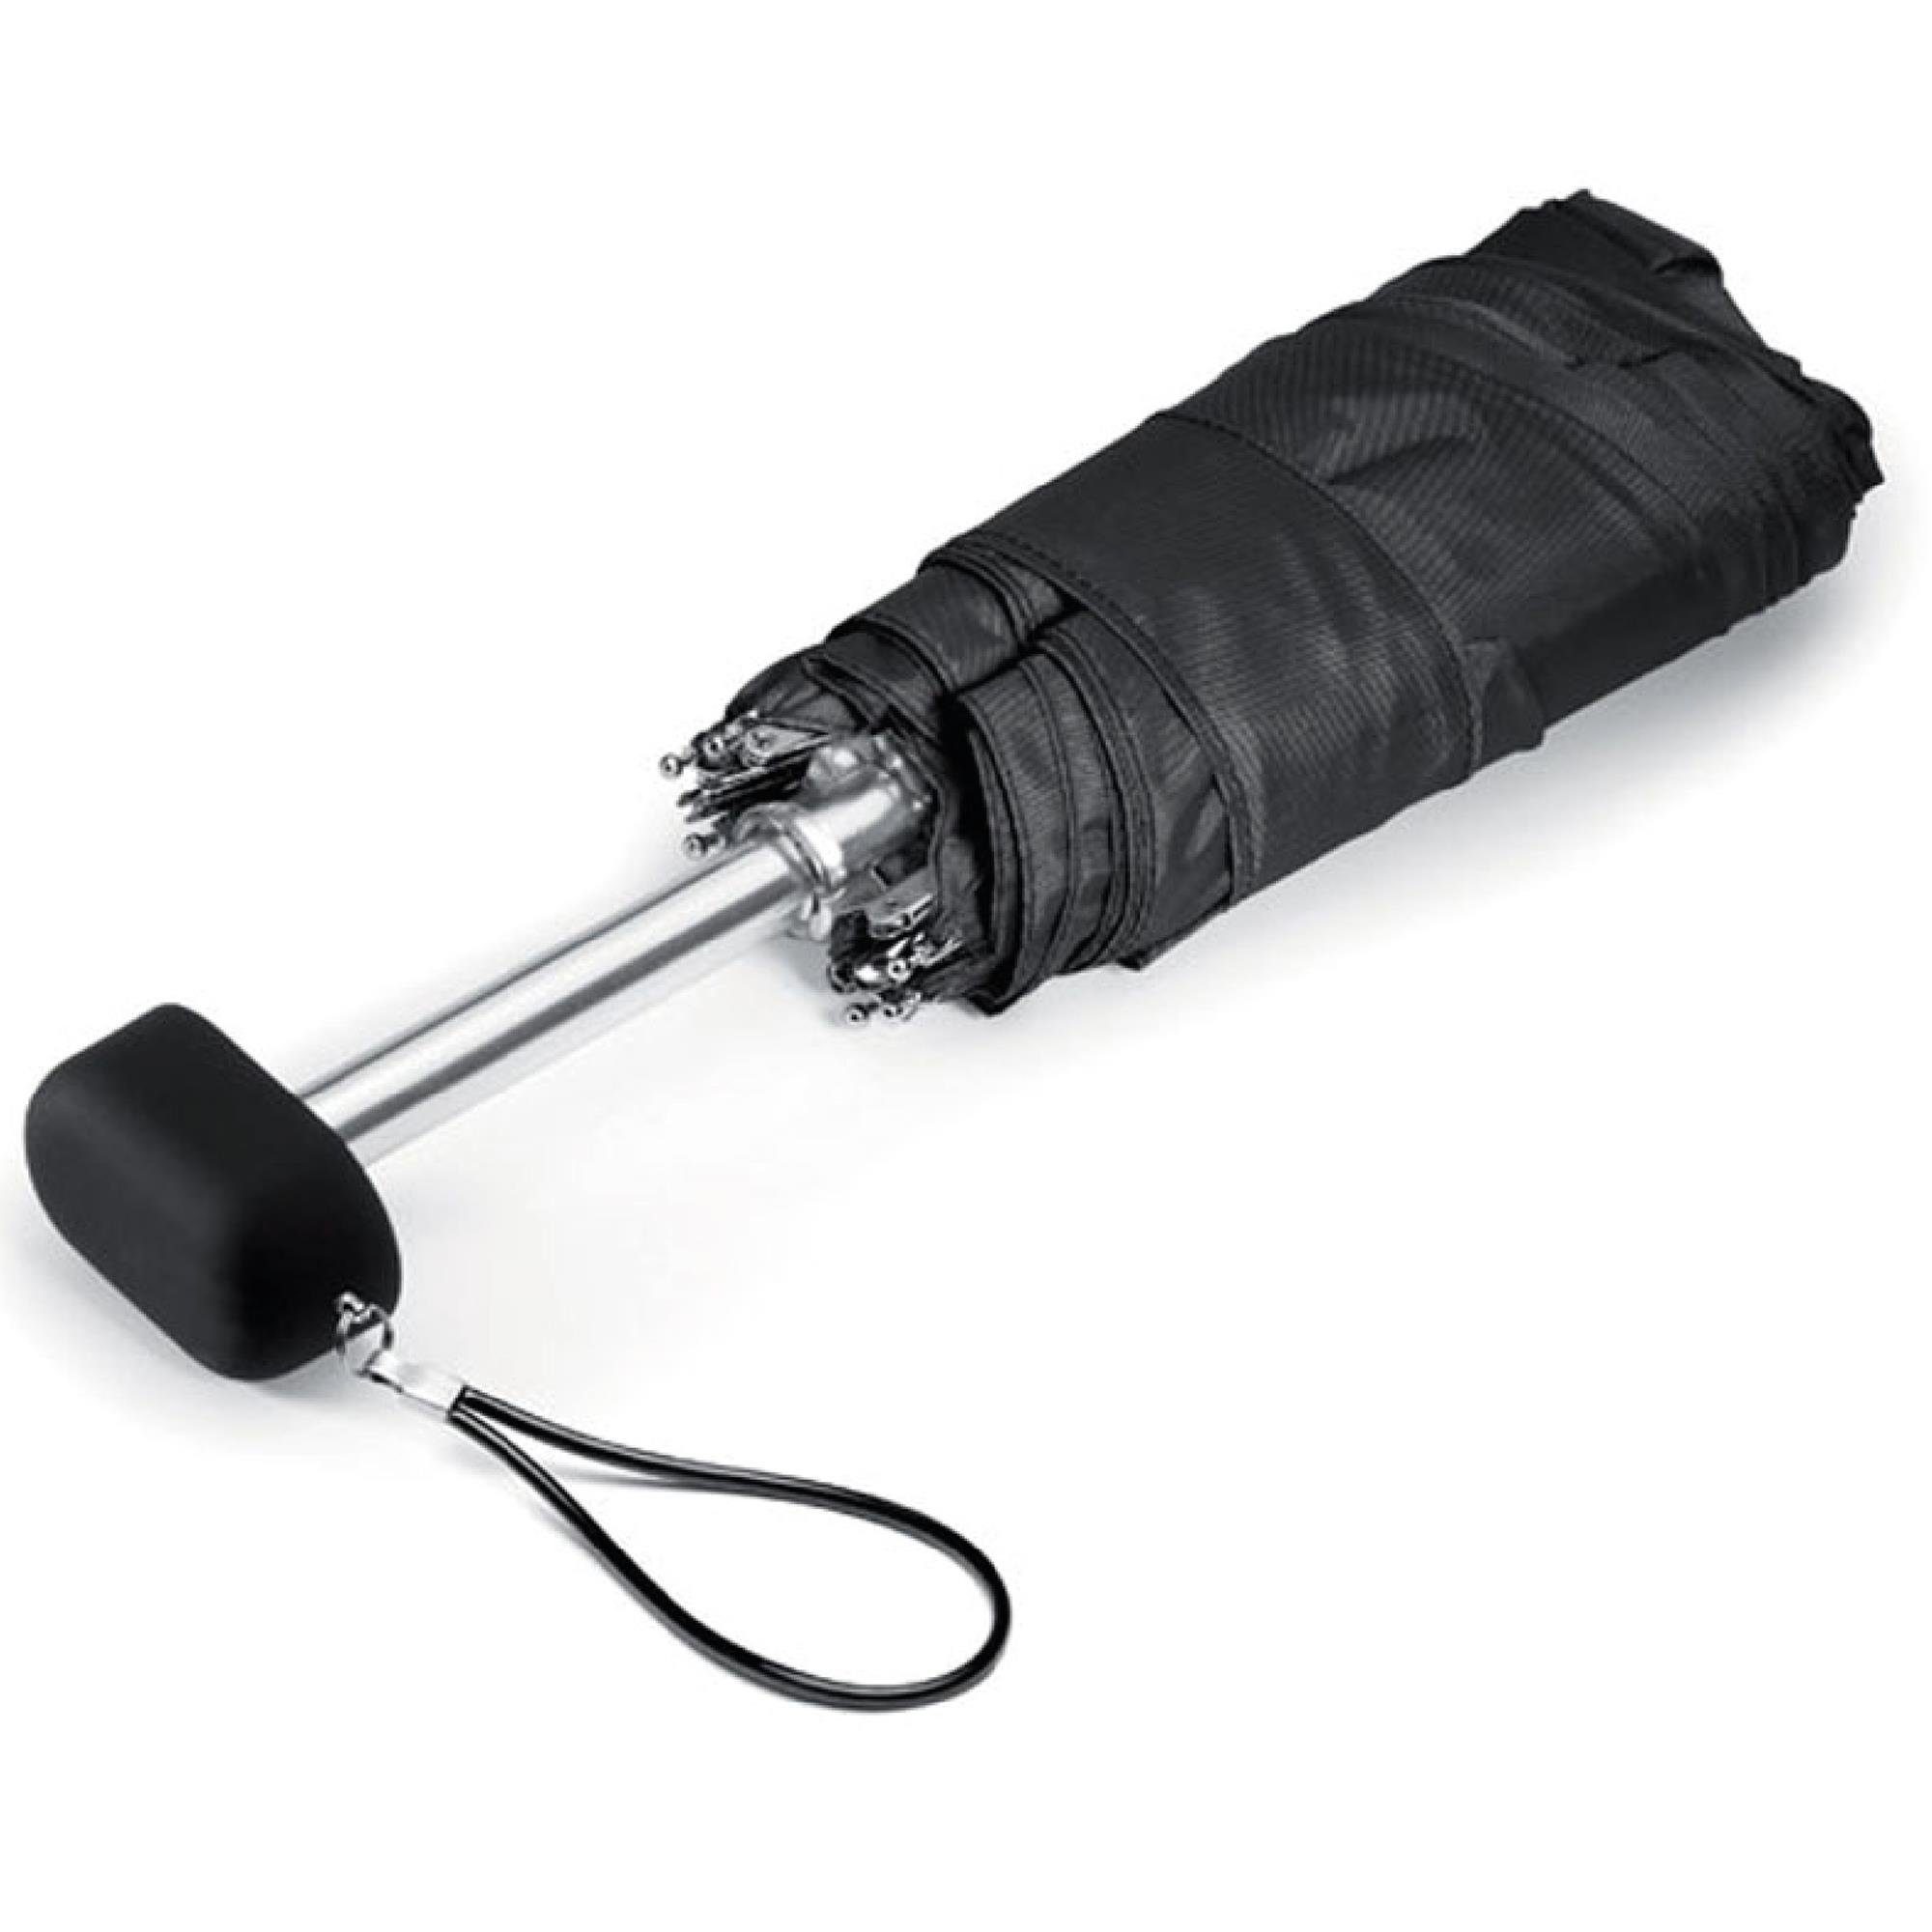 Taschenregenschirm windfest stabil, geschlossen schnelltrocknend ultraleicht, Bestlivings Taschenregenschirm, Regenschirm 19cm, und Mini